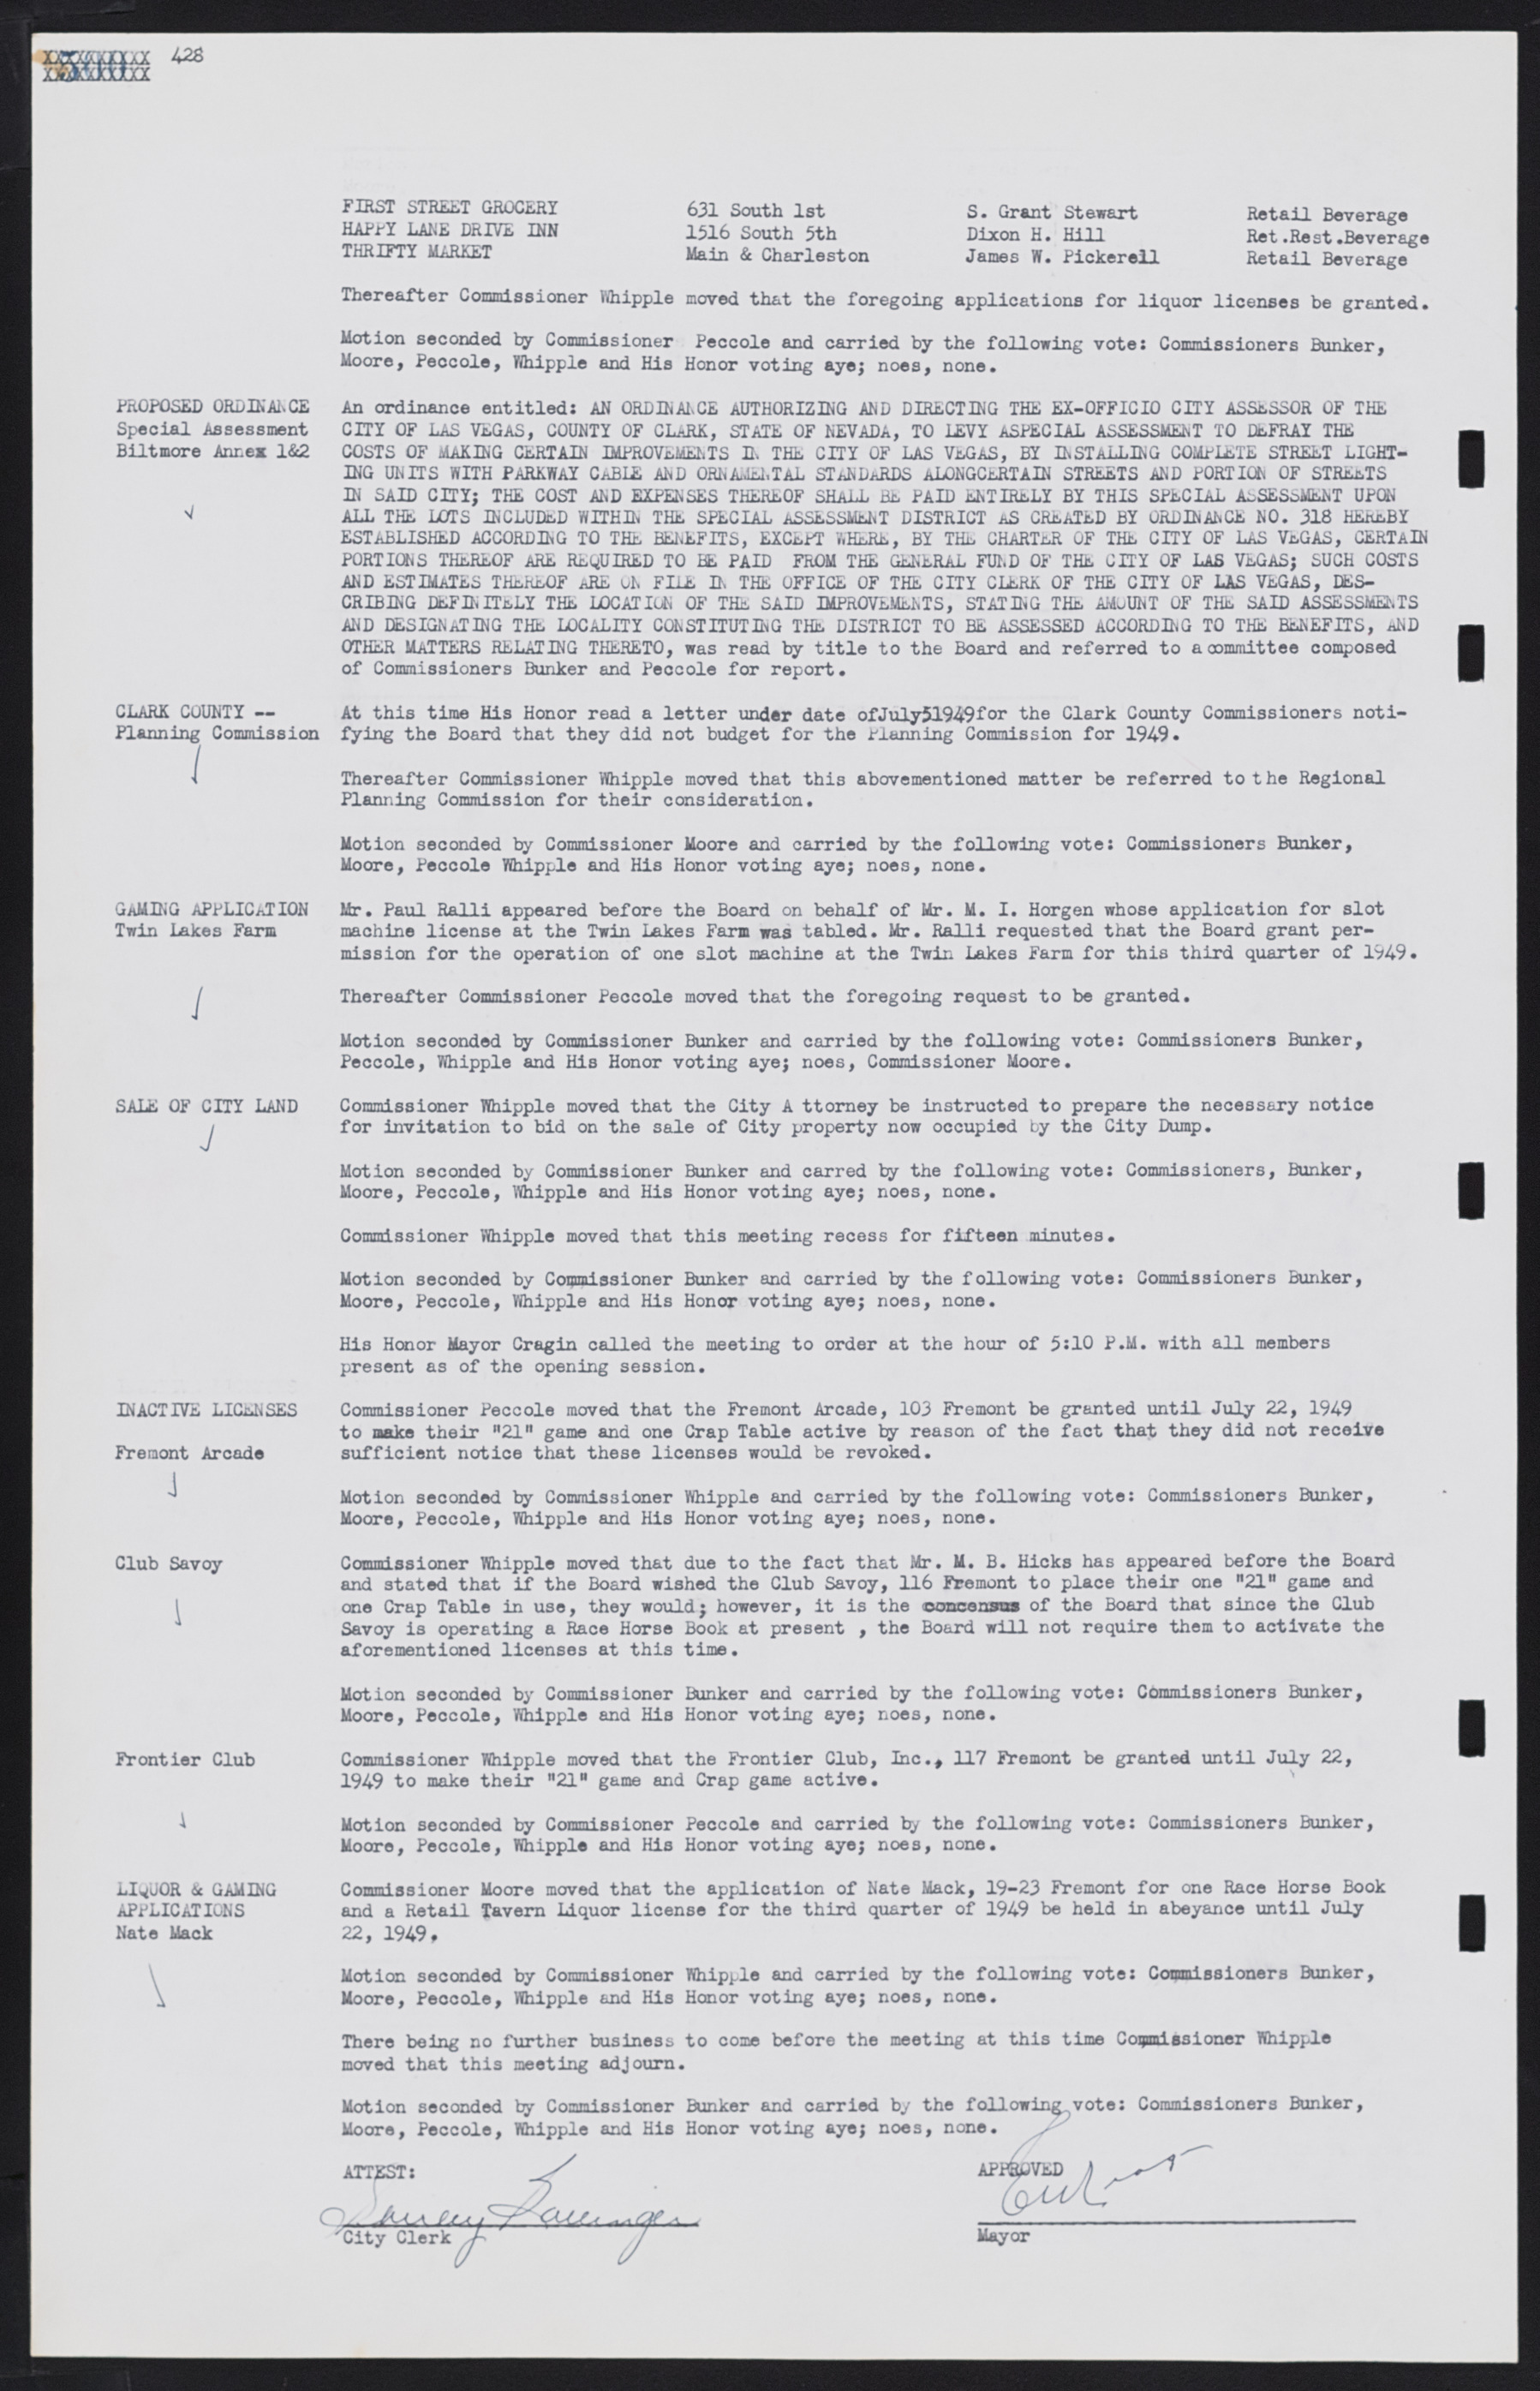 Las Vegas City Commission Minutes, January 7, 1947 to October 26, 1949, lvc000006-460